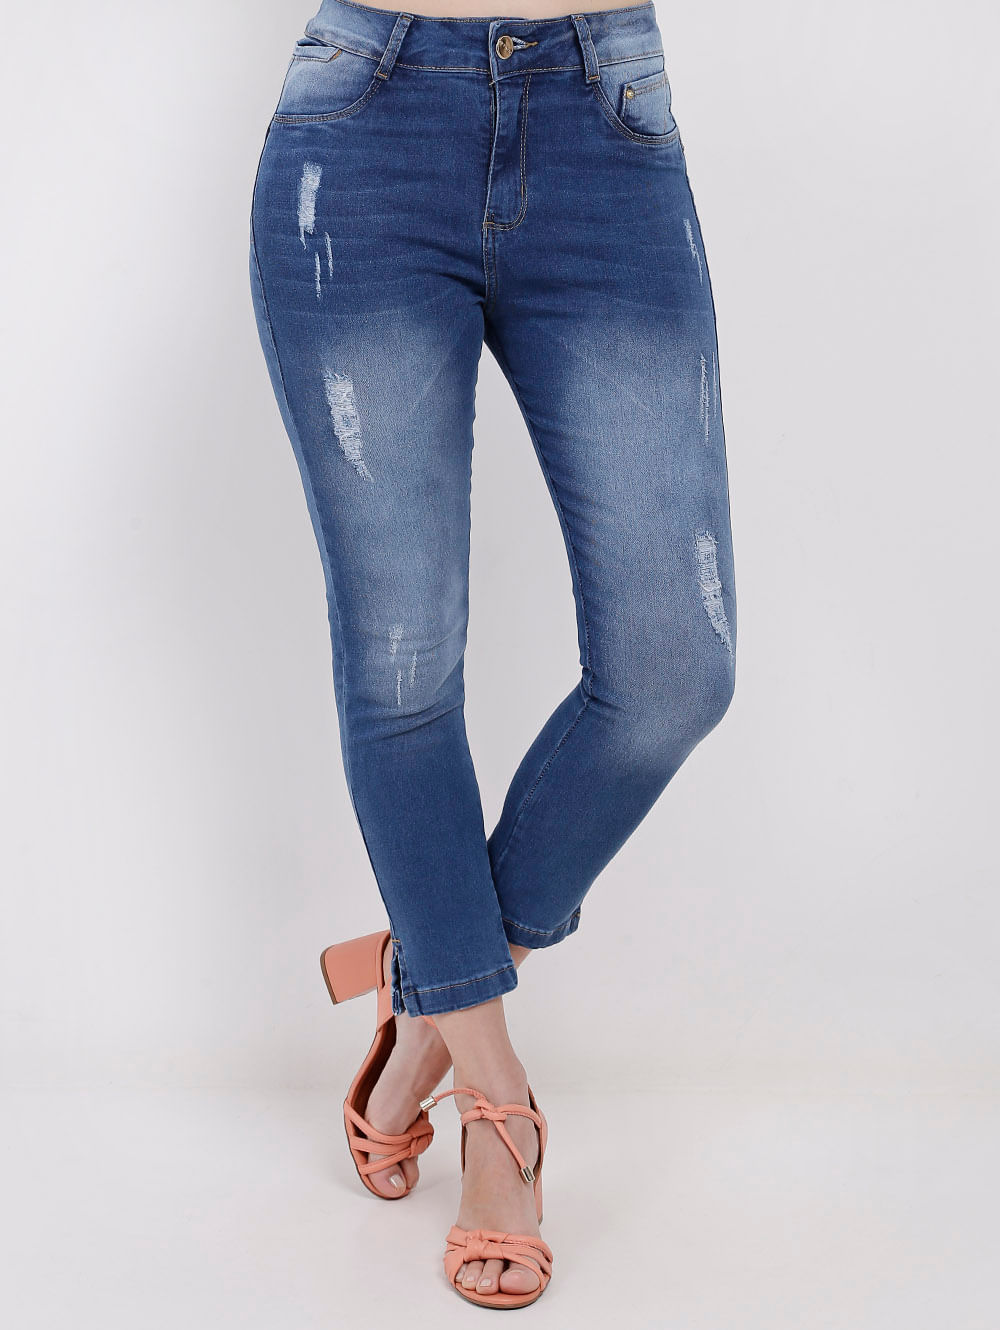 capri feminina jeans